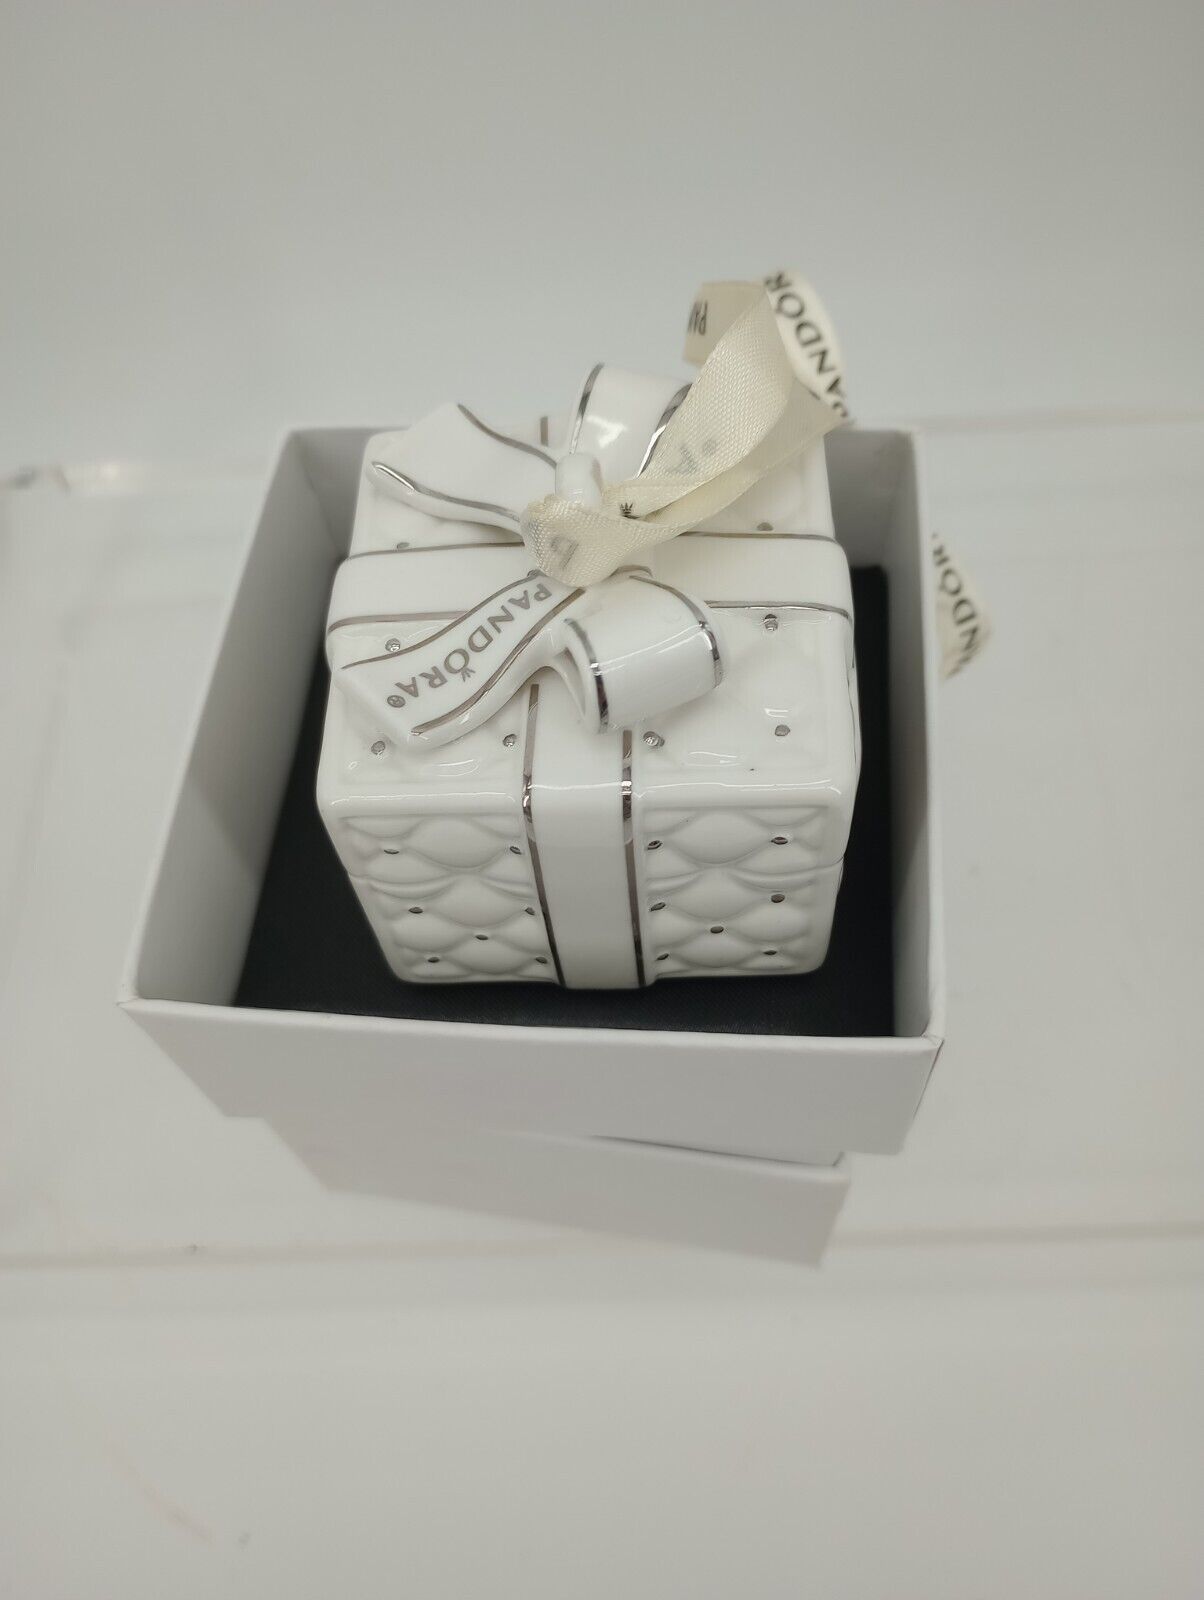 PANDORA Gift Box Ornament 2016 Porcelain with Gift Box EUC